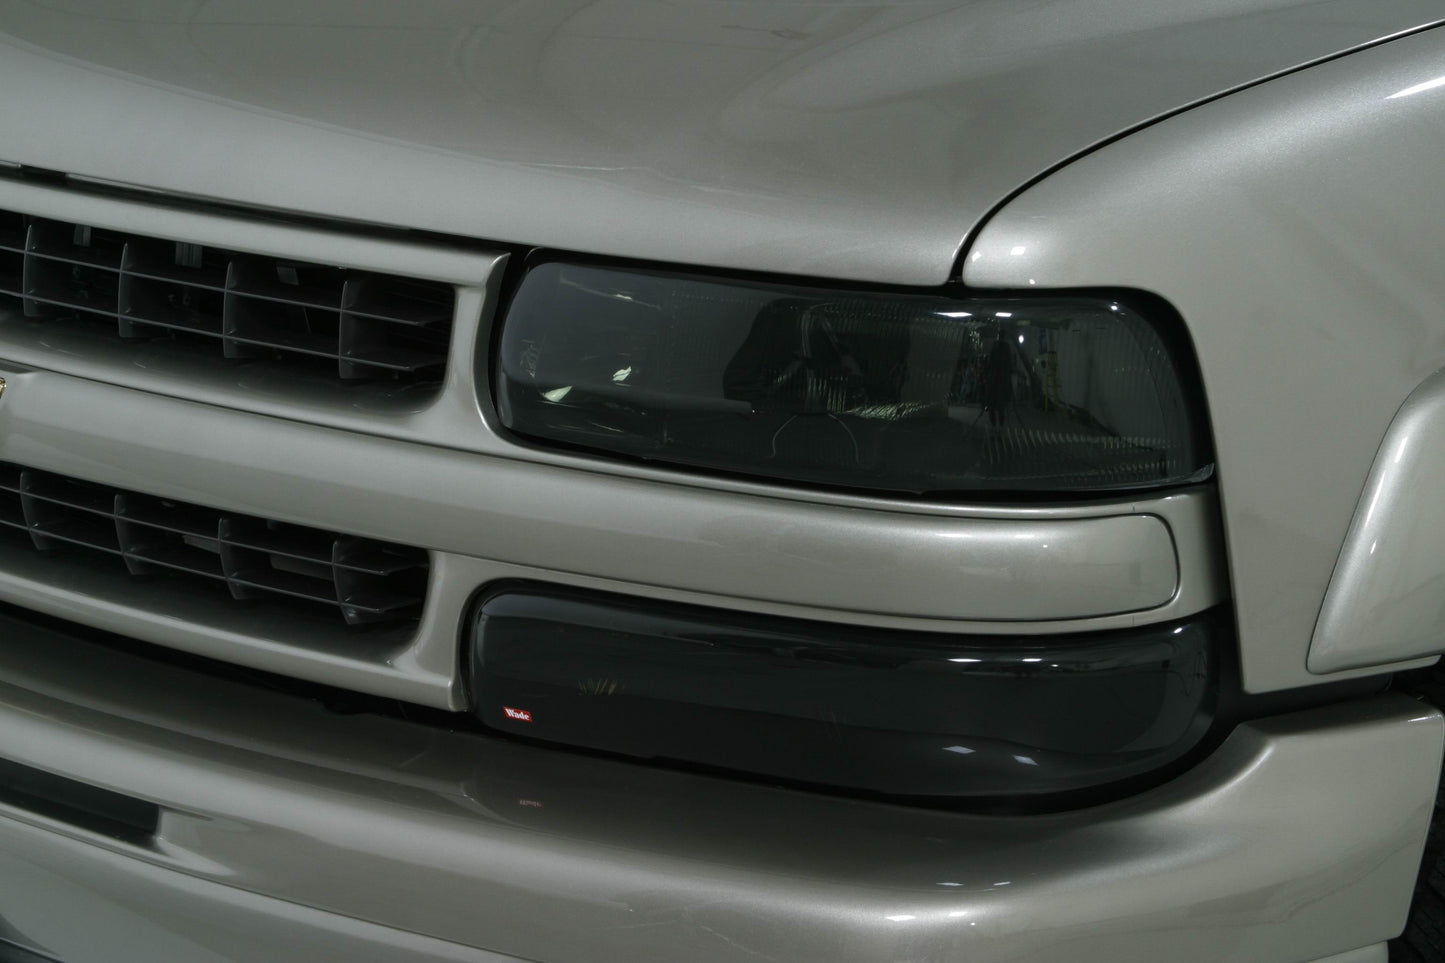 1997 Volkswagen Cabrio Head Light Covers